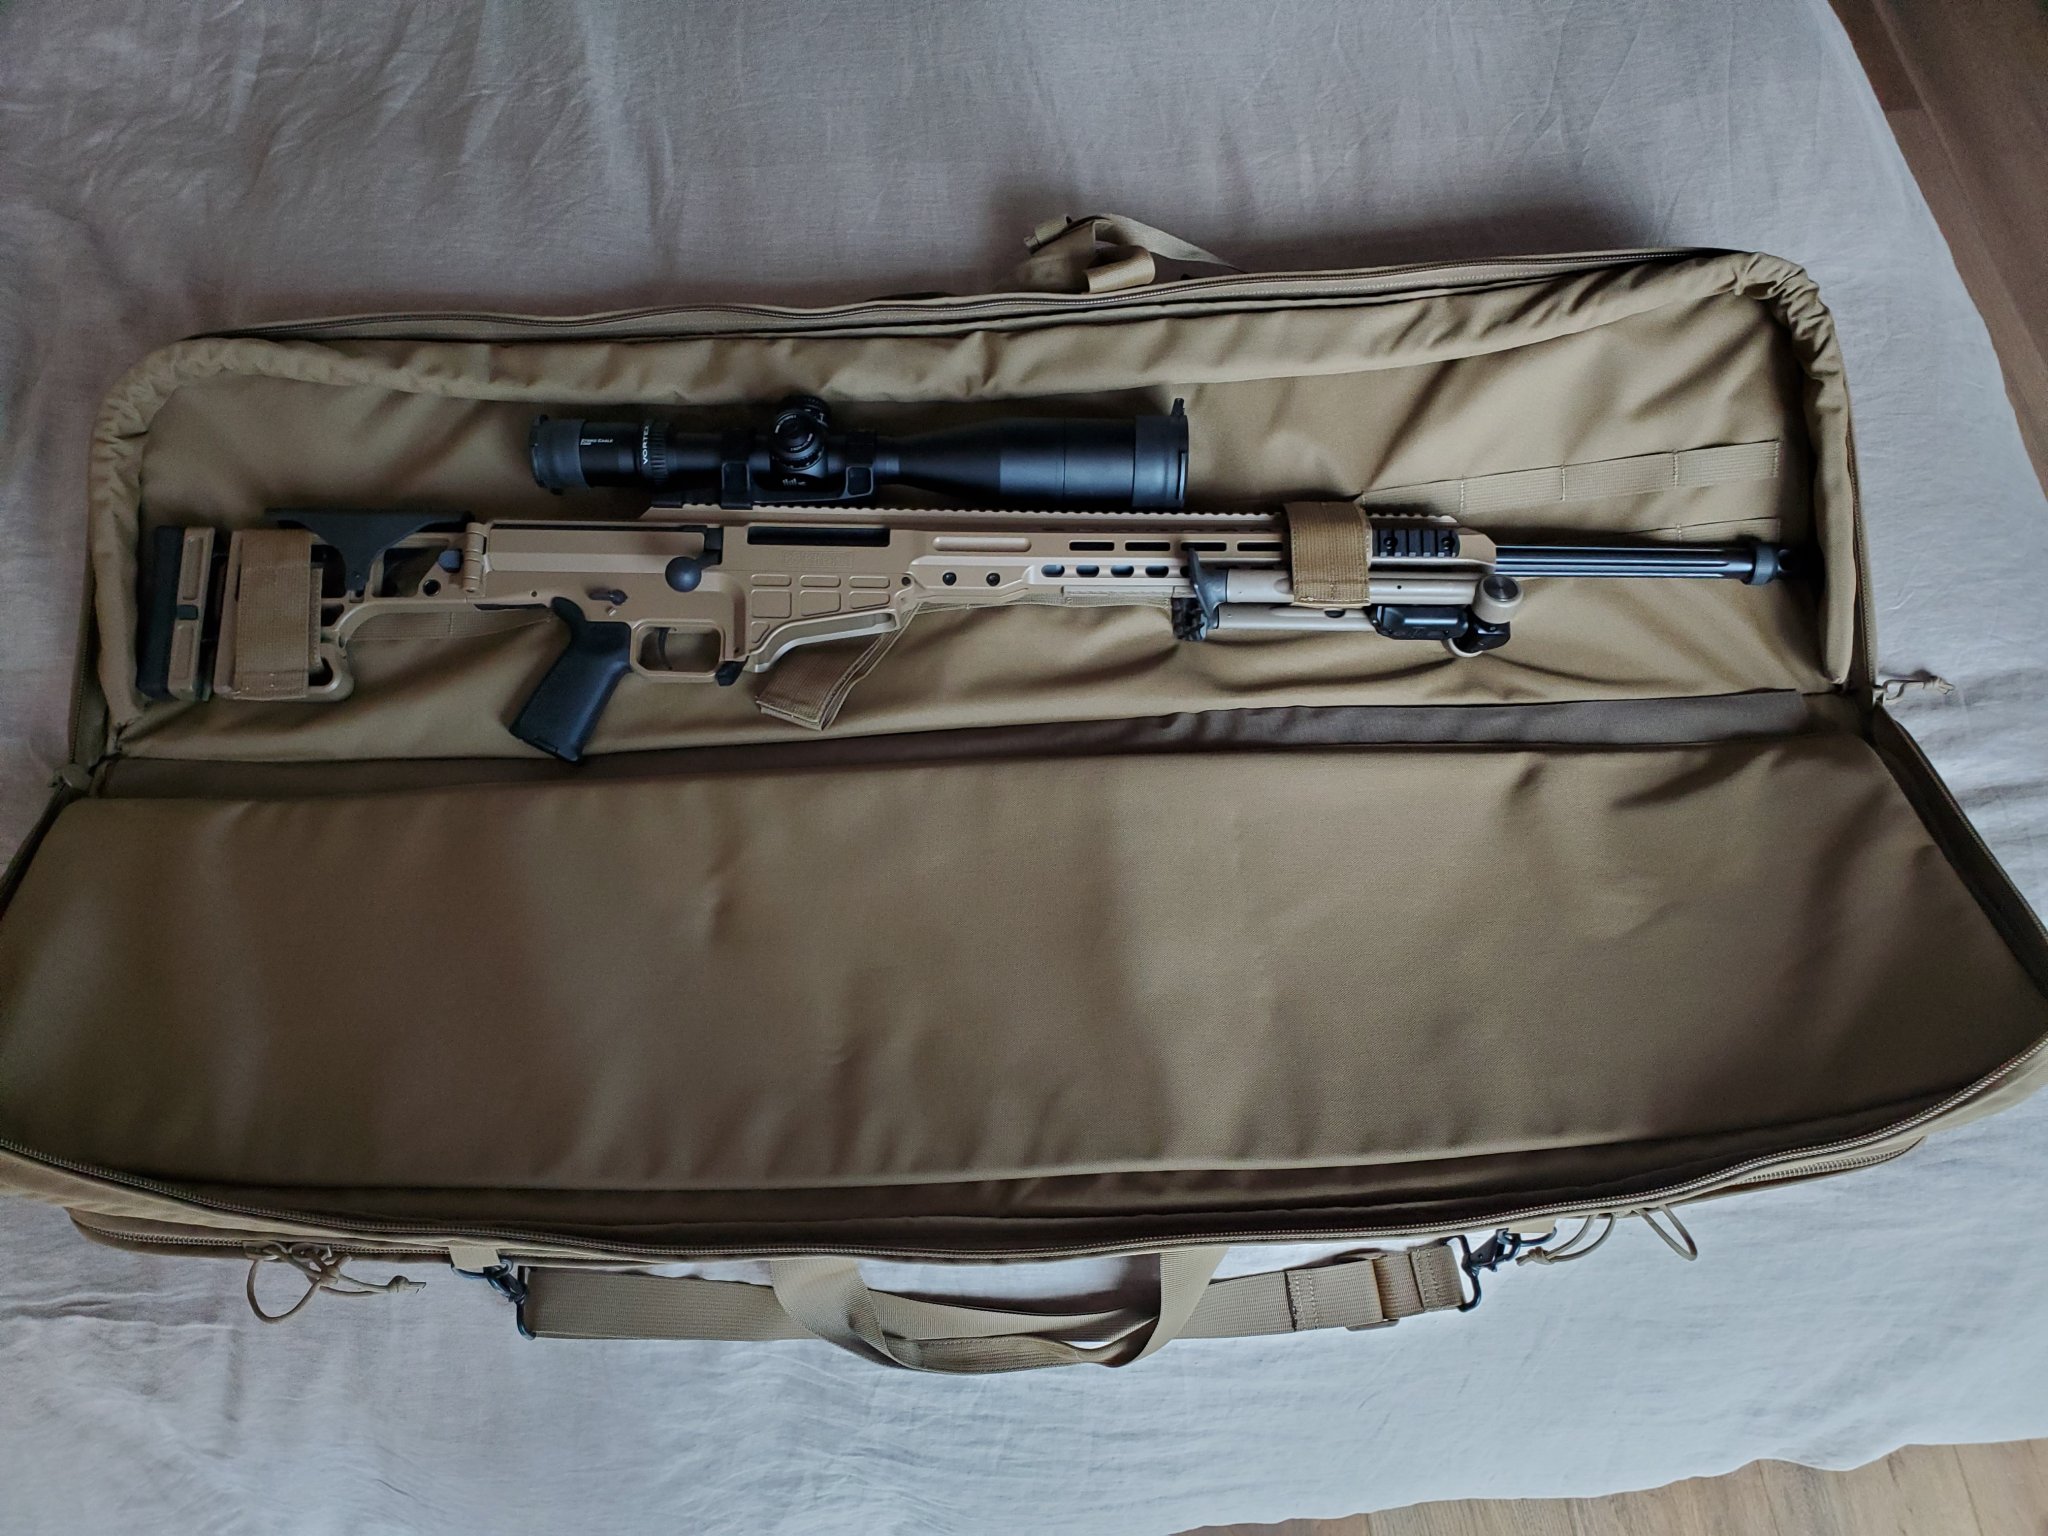 Mk22 Bag Inside Rifle.jpg